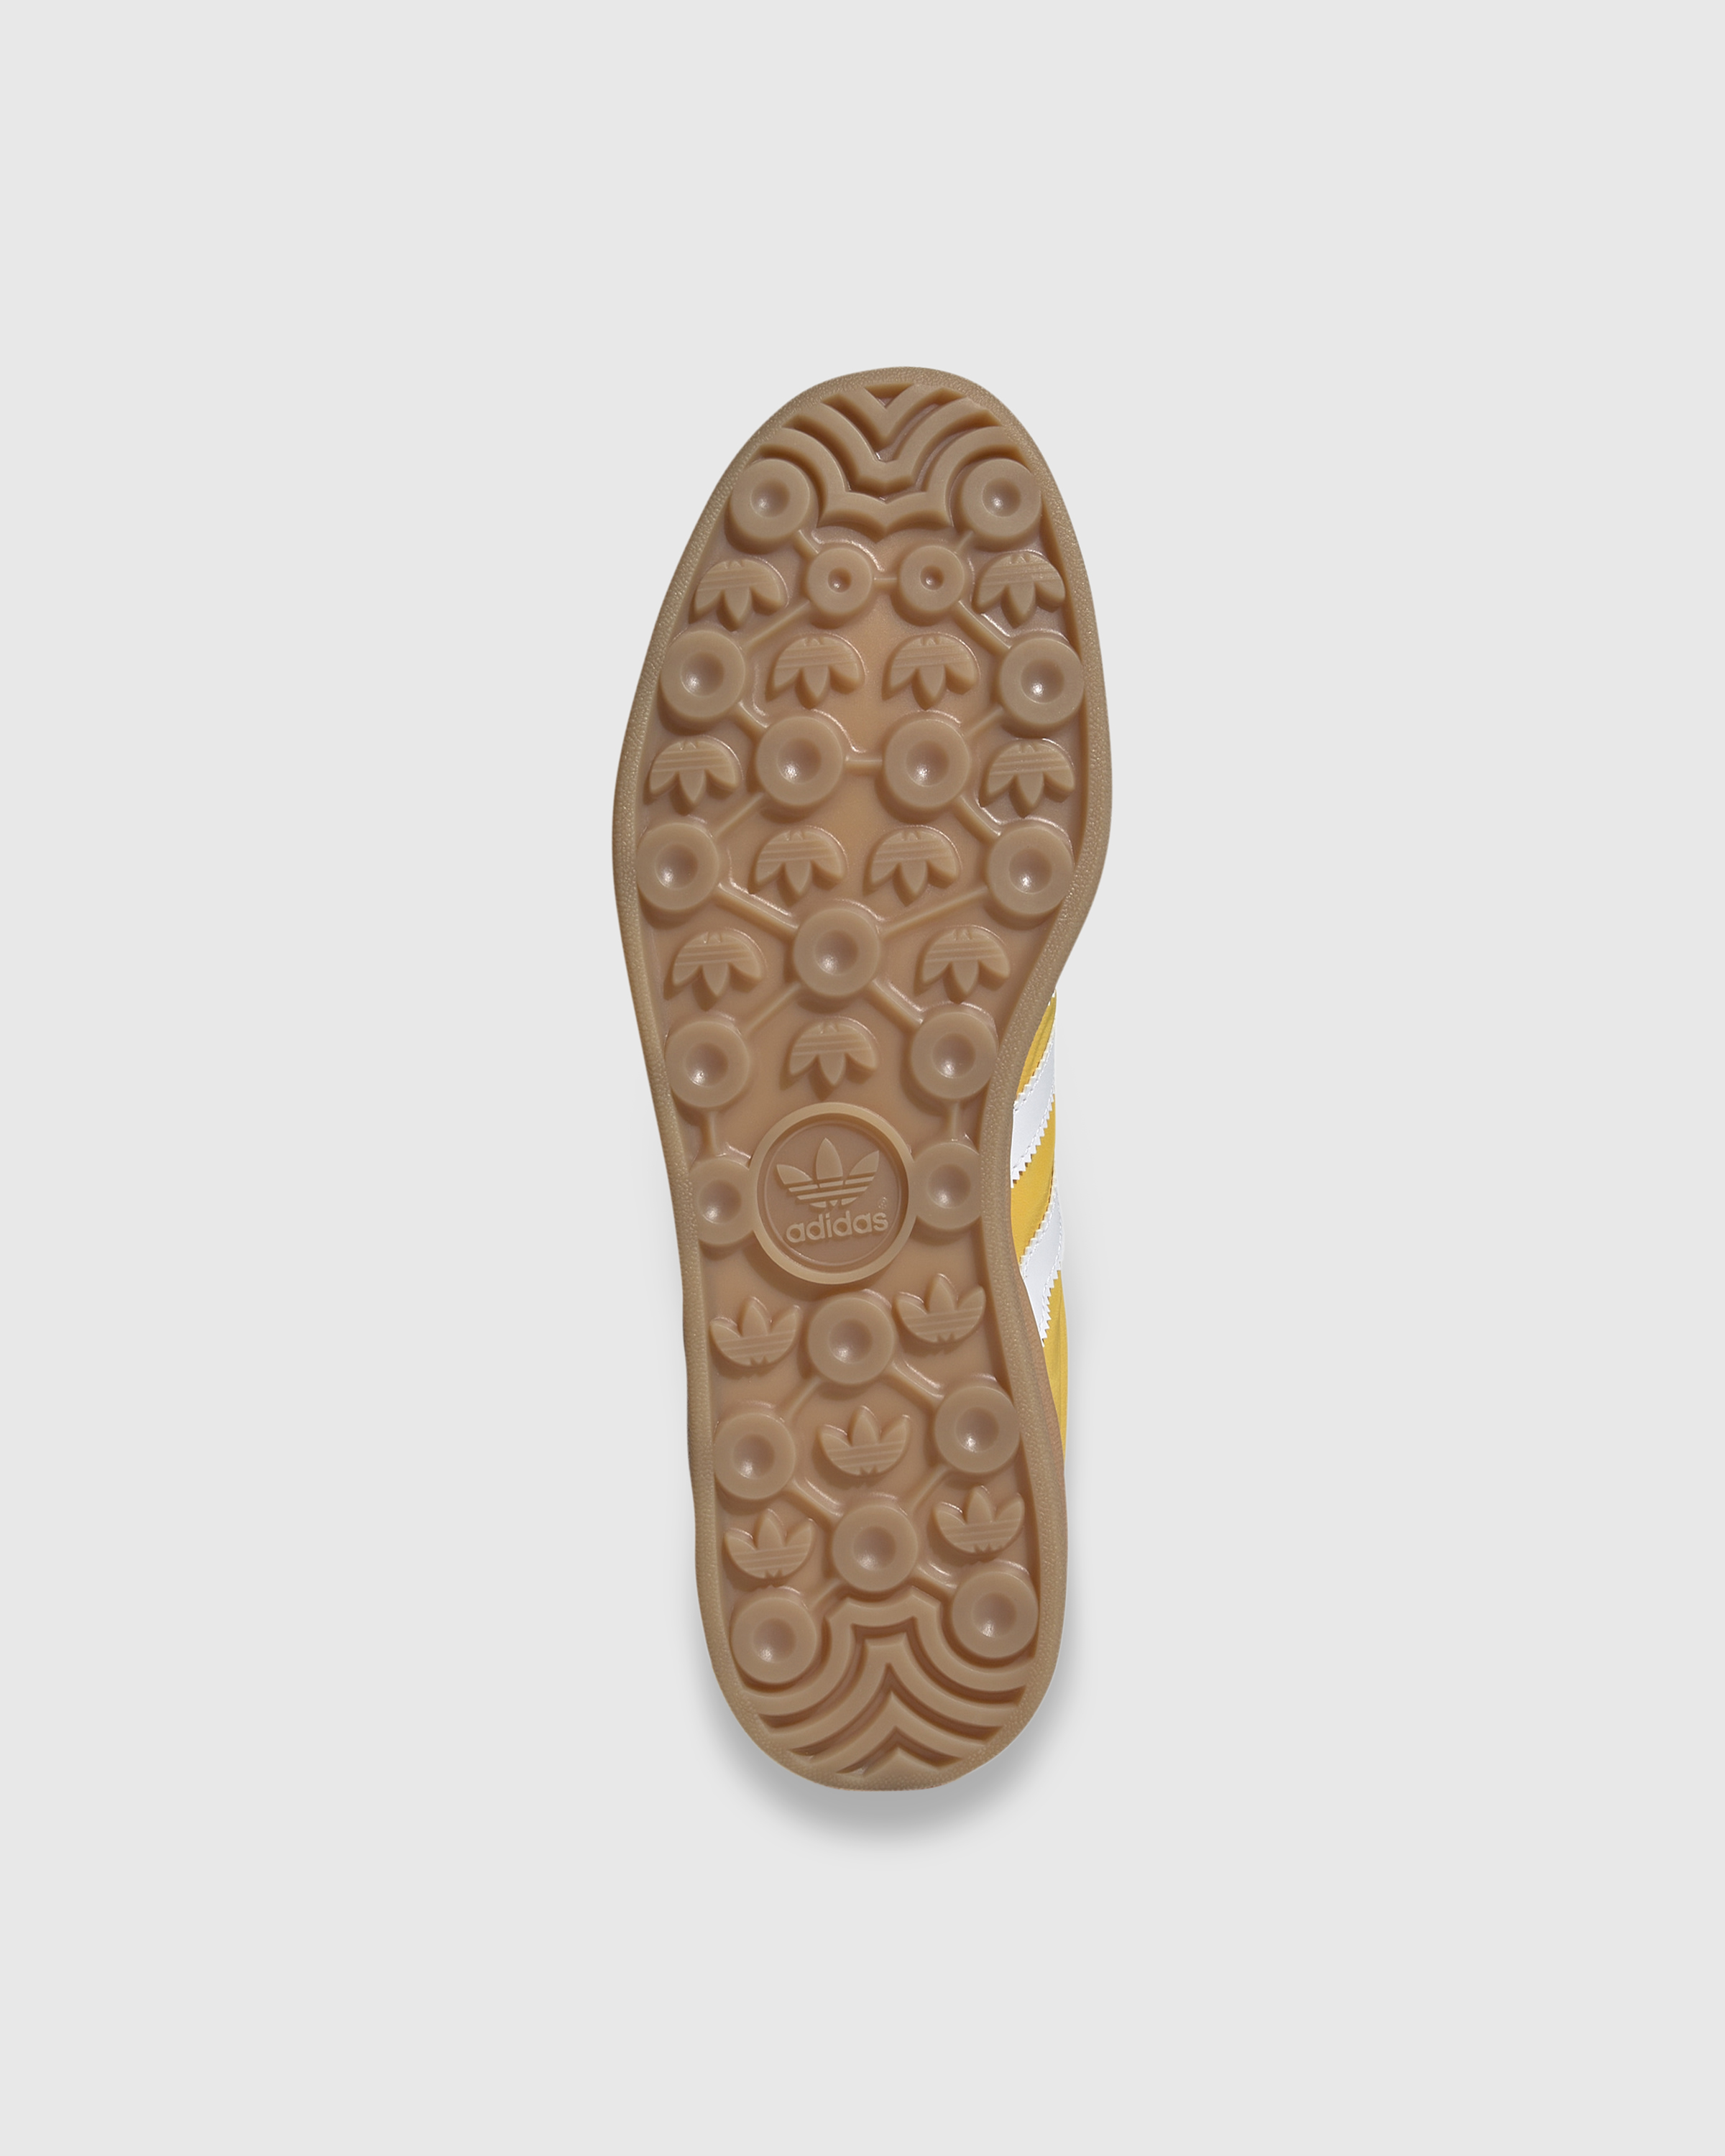 Adidas – Gazelle Indoor Yellow/White - Low Top Sneakers - Yellow - Image 6